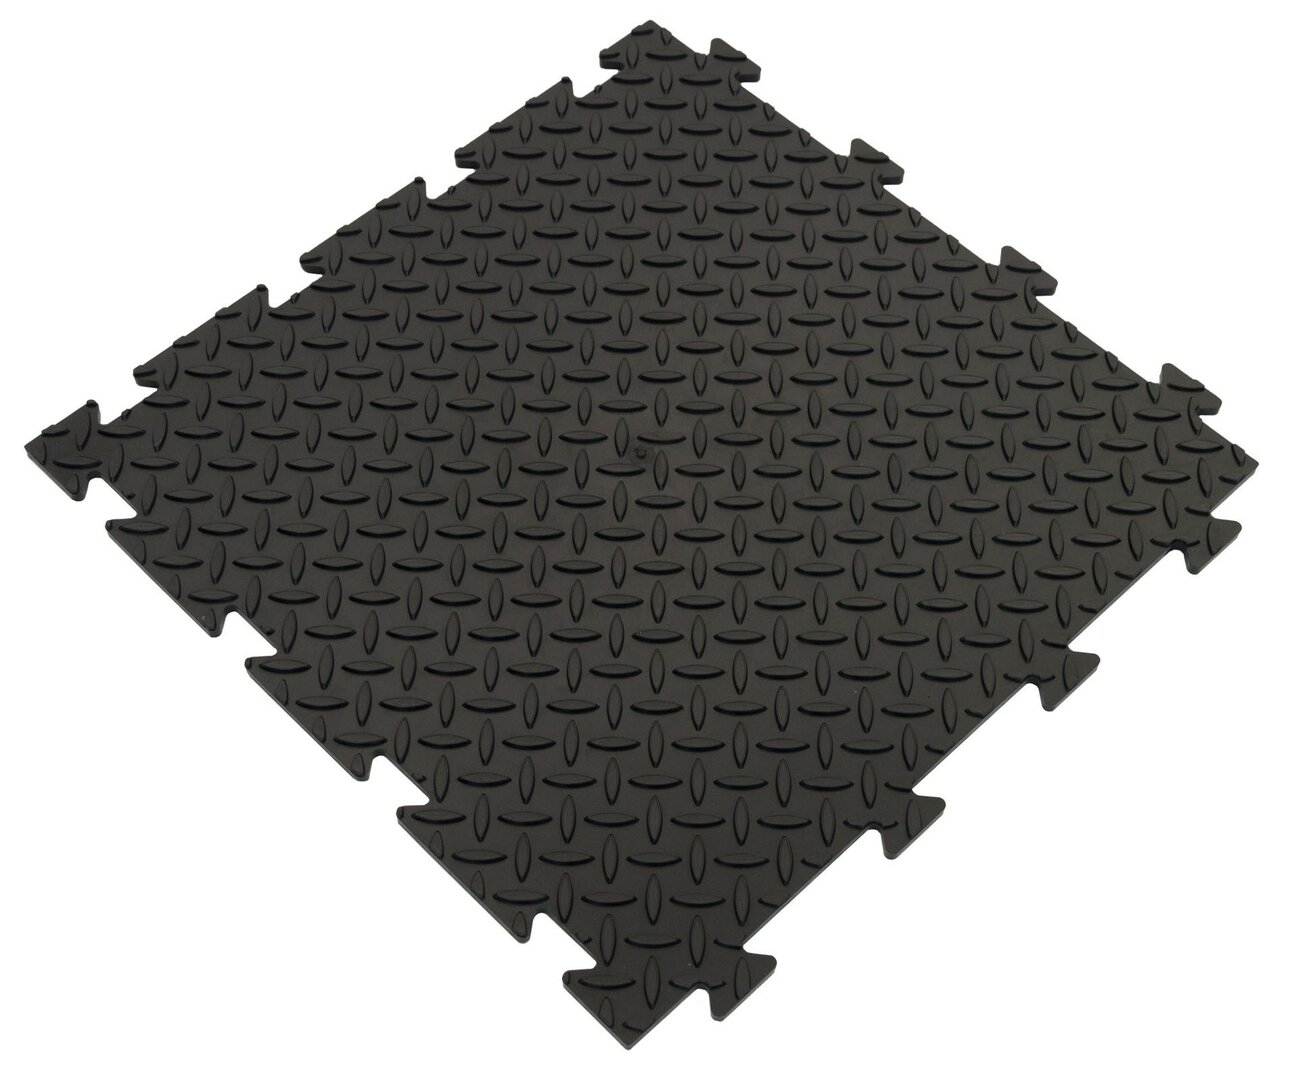 Černá PVC vinylová zátěžová puzzle protiskluzová dlažba Tenax (diamant) - délka 47,5 cm, šířka 47,5 cm a výška 0,8 cm